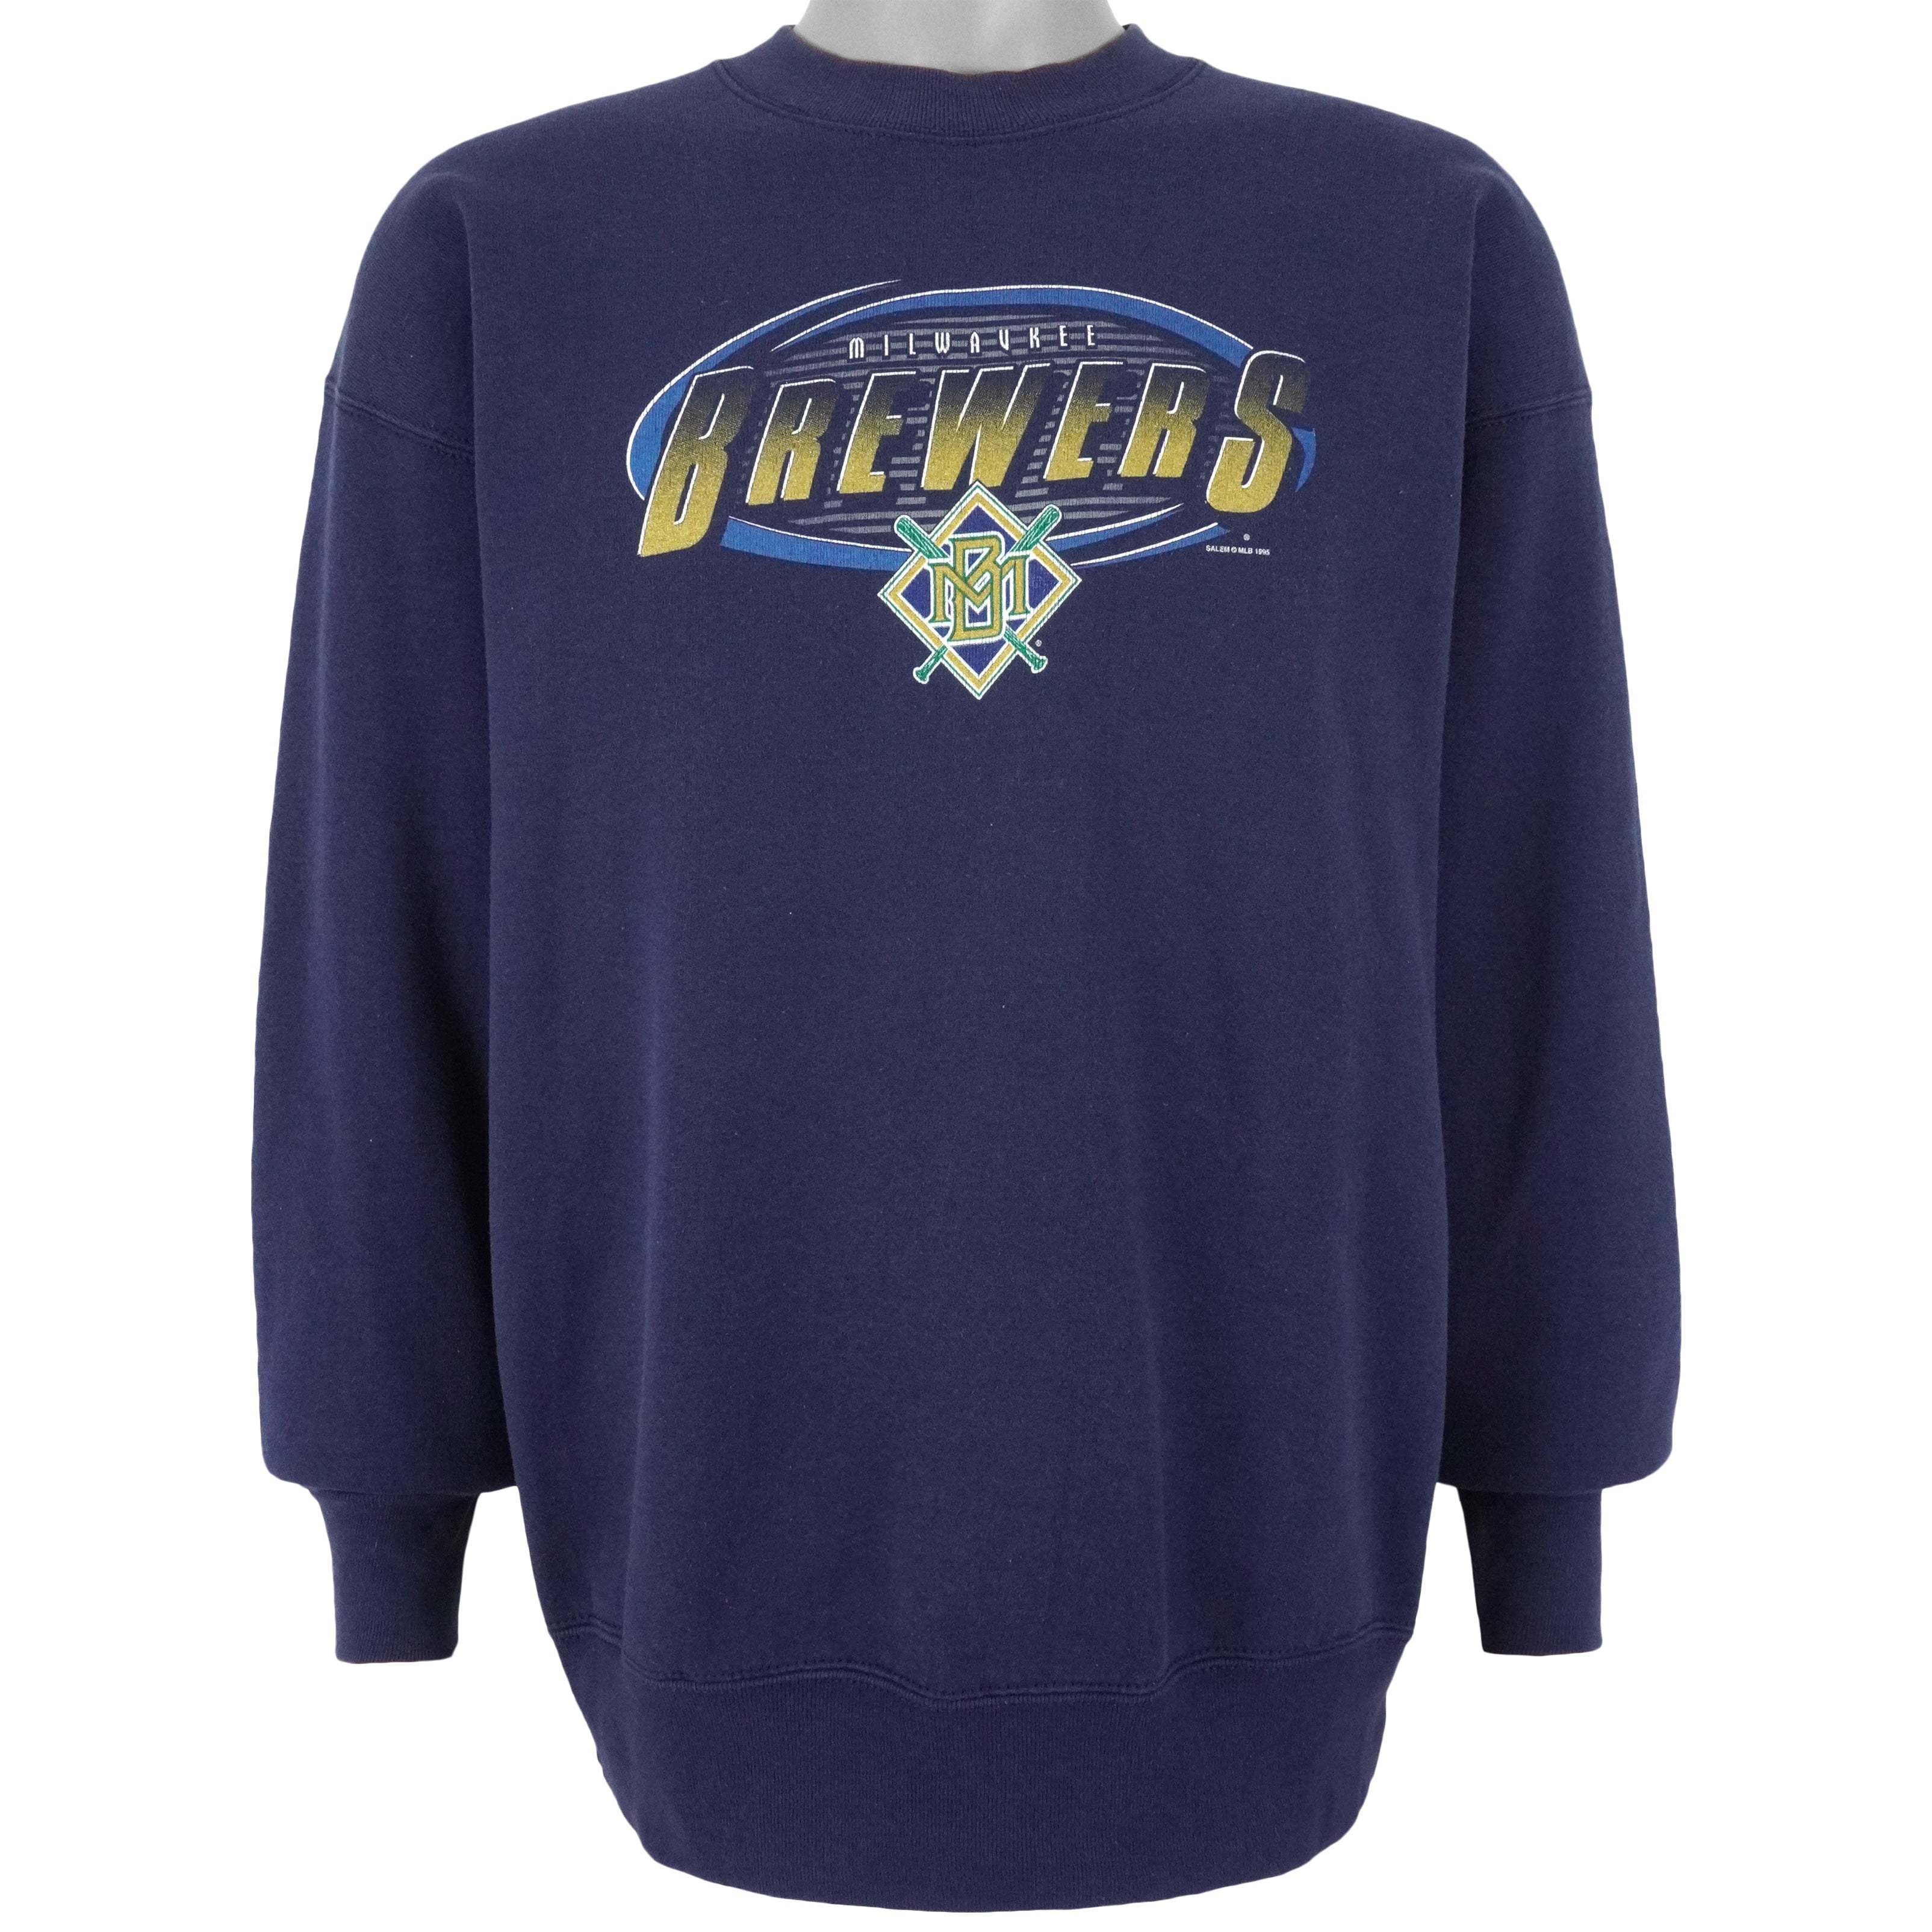 Vintage MLB (Pro Player) - Milwaukee Brewers Crew Neck Sweatshirt 1995 X-Large